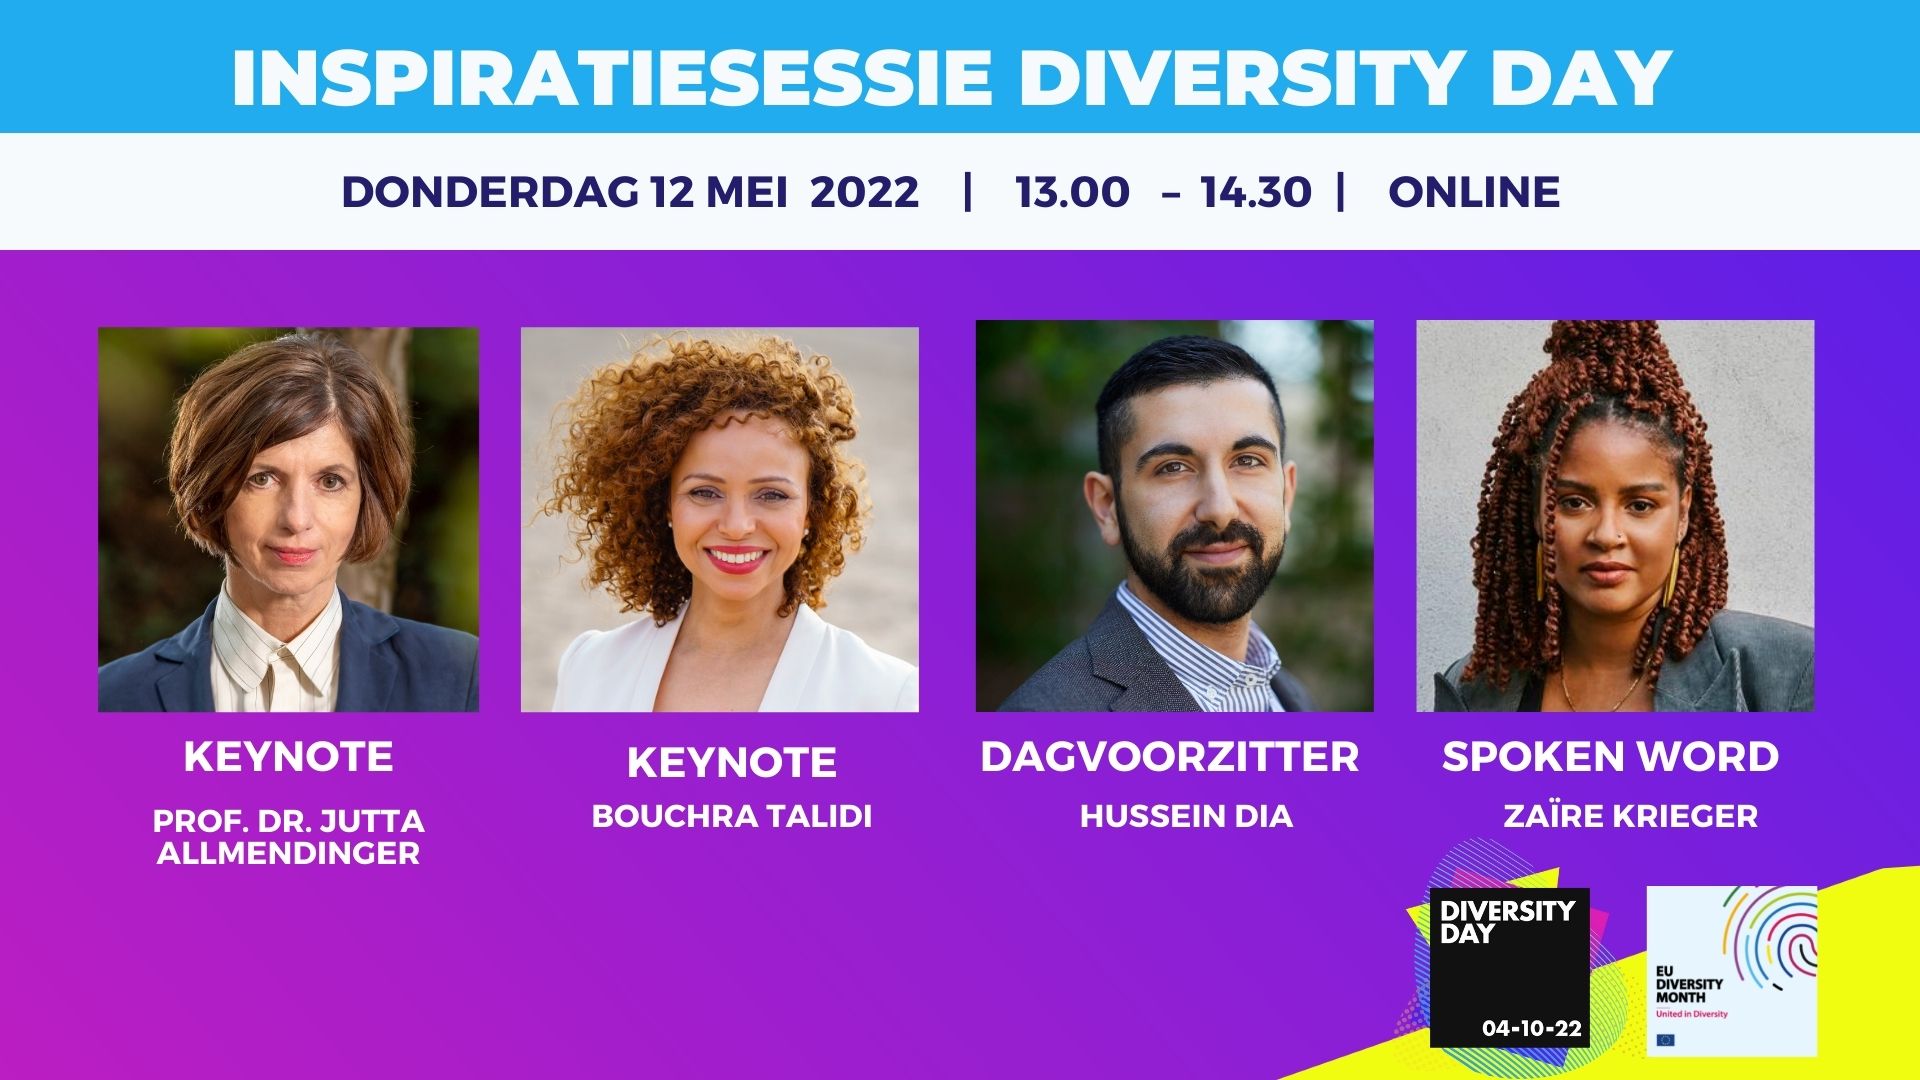 Profielfoto's sprekers Diversity Day inspiratiesessie. V.l.n.r.: Jutta Allmendinger, Bouchra Talidi, Hussein Dia, Zaïre Krieger